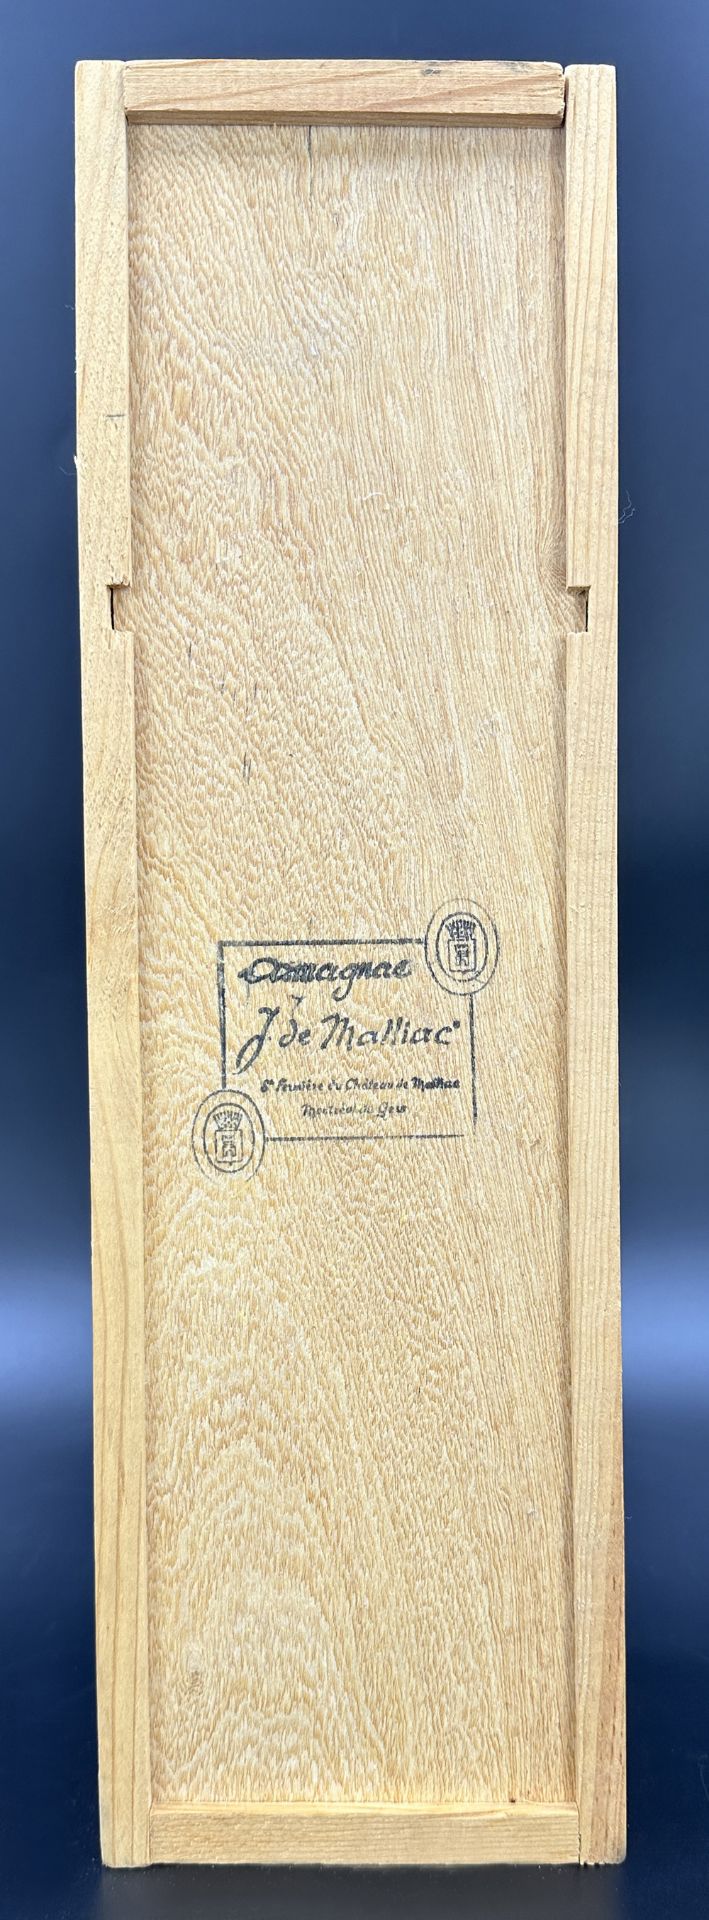 J. de MALLIAC. 1 bottle of Armagnac. Hors dänge. France. - Image 12 of 12